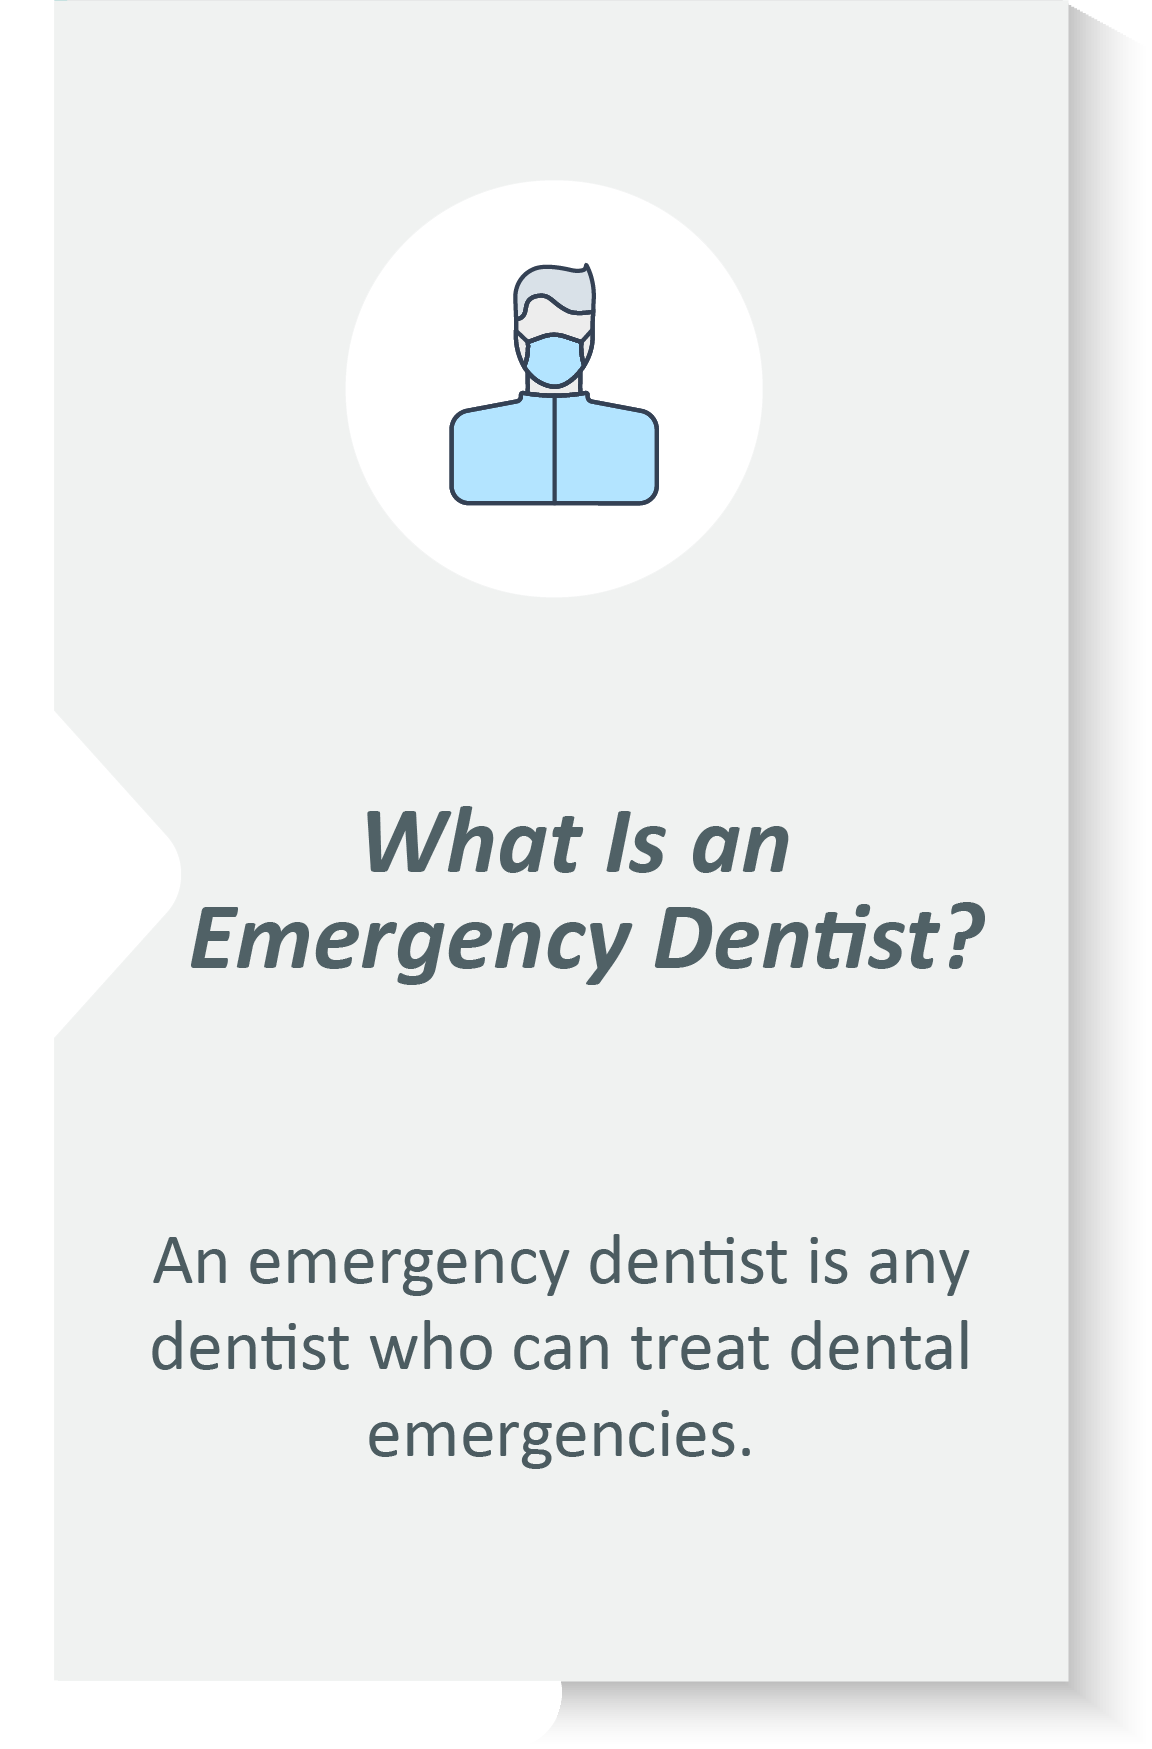 Emergency dentist infographic: An emergency dentist is any dentist who can treat dental emergencies.